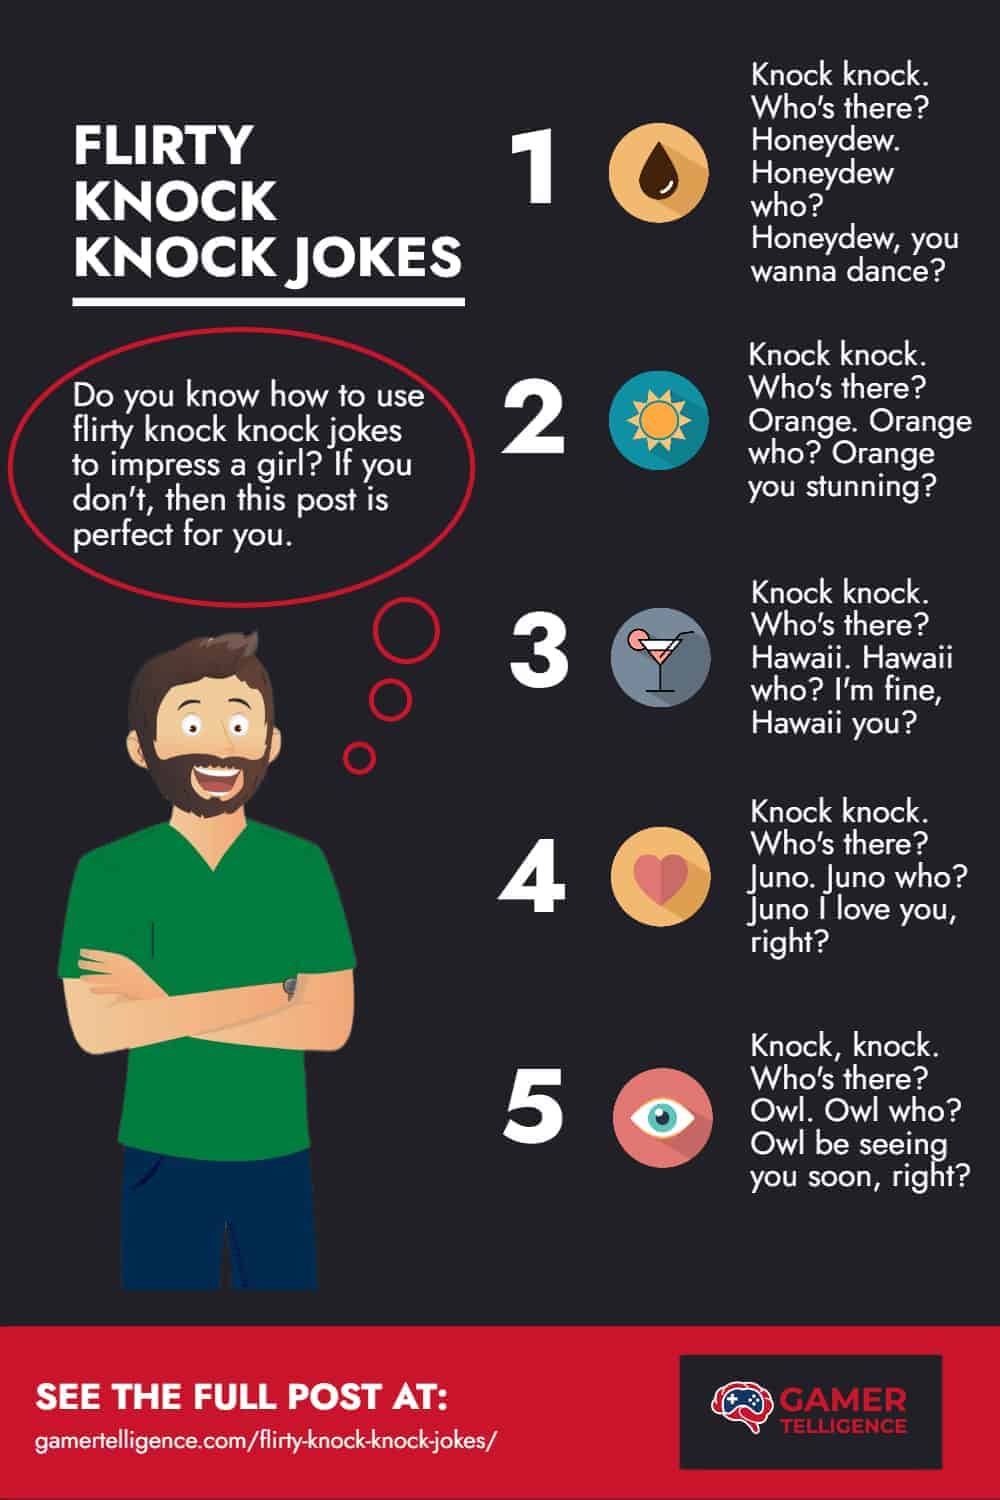 Knock Knock Dirty Joke 17 Knock Knock Jokes - New And Cheerful Ways To Flirt With Anyone